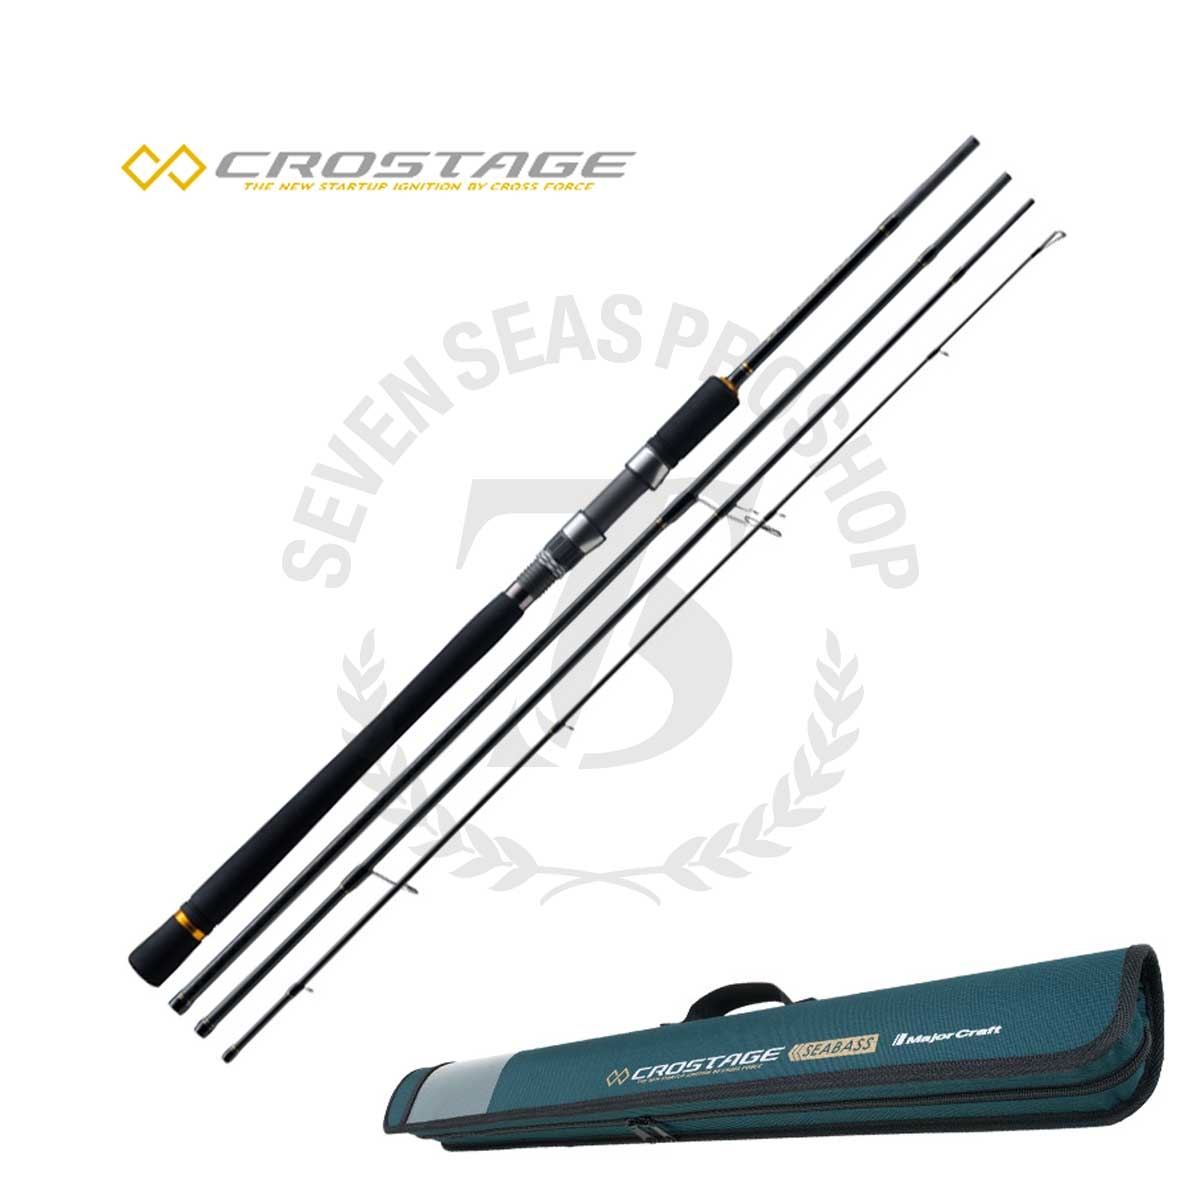 Major Craft Crostage Pack Rod 4pcs Seabass #CRX-904ML (Spinning